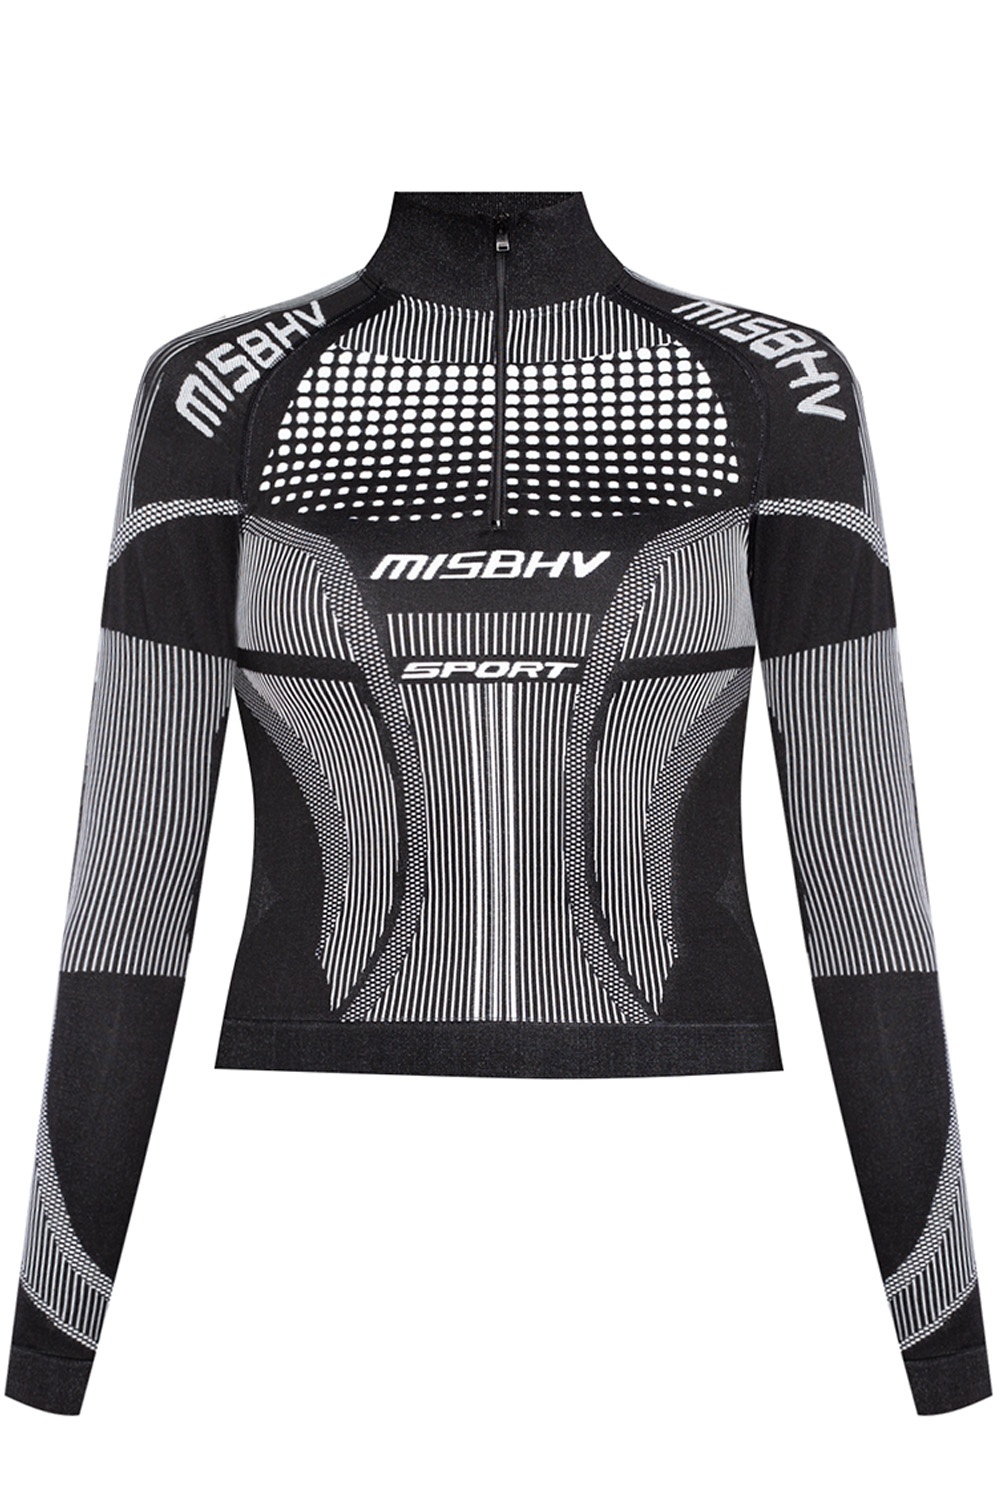 IetpShops | MISBHV 'Sport Active' top with long sleeves | Acid